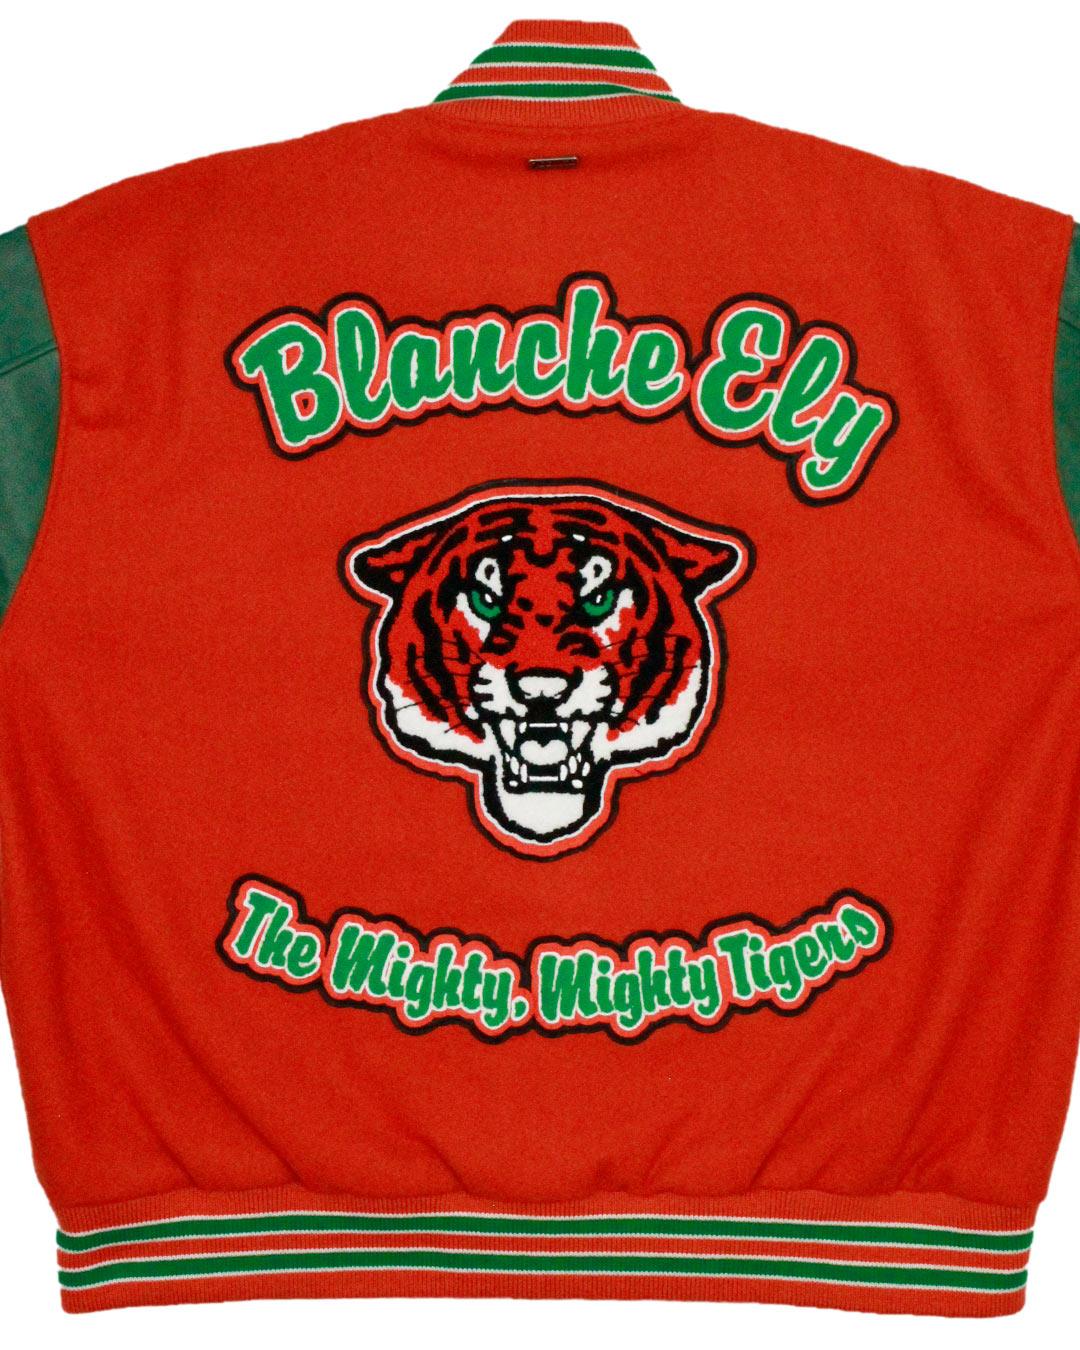 Blanche Ely High School Tigers Letterman jacket, Pompano Beach, FL -  Back